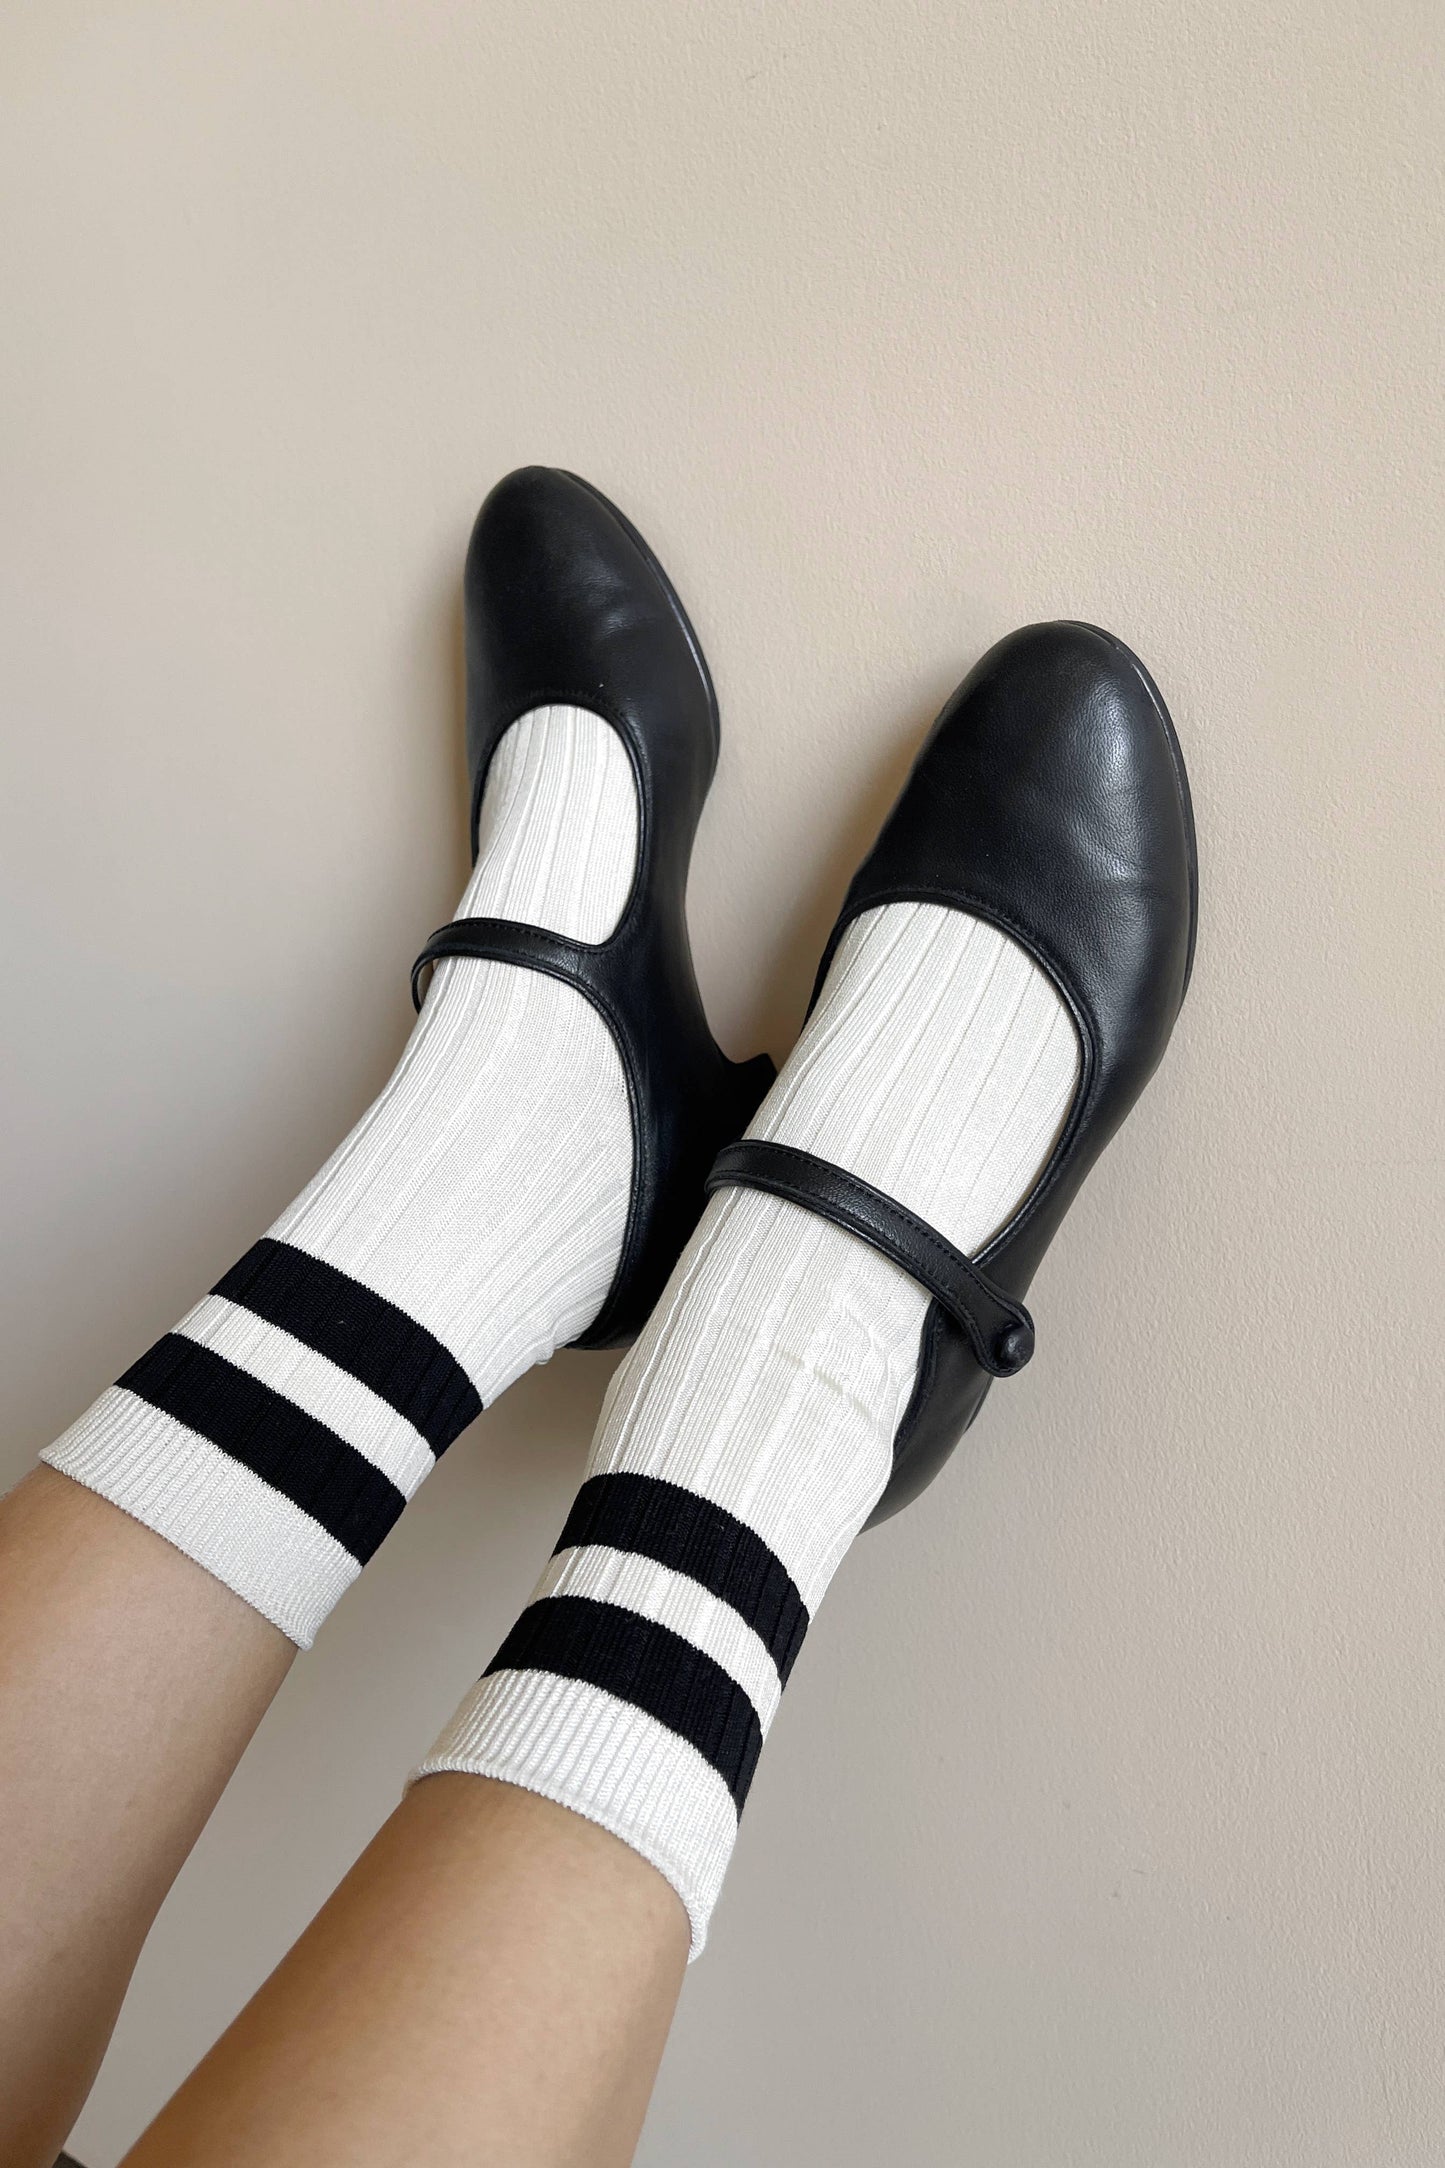 LE BON SHOPPE | Her Socks - Varsity: Black